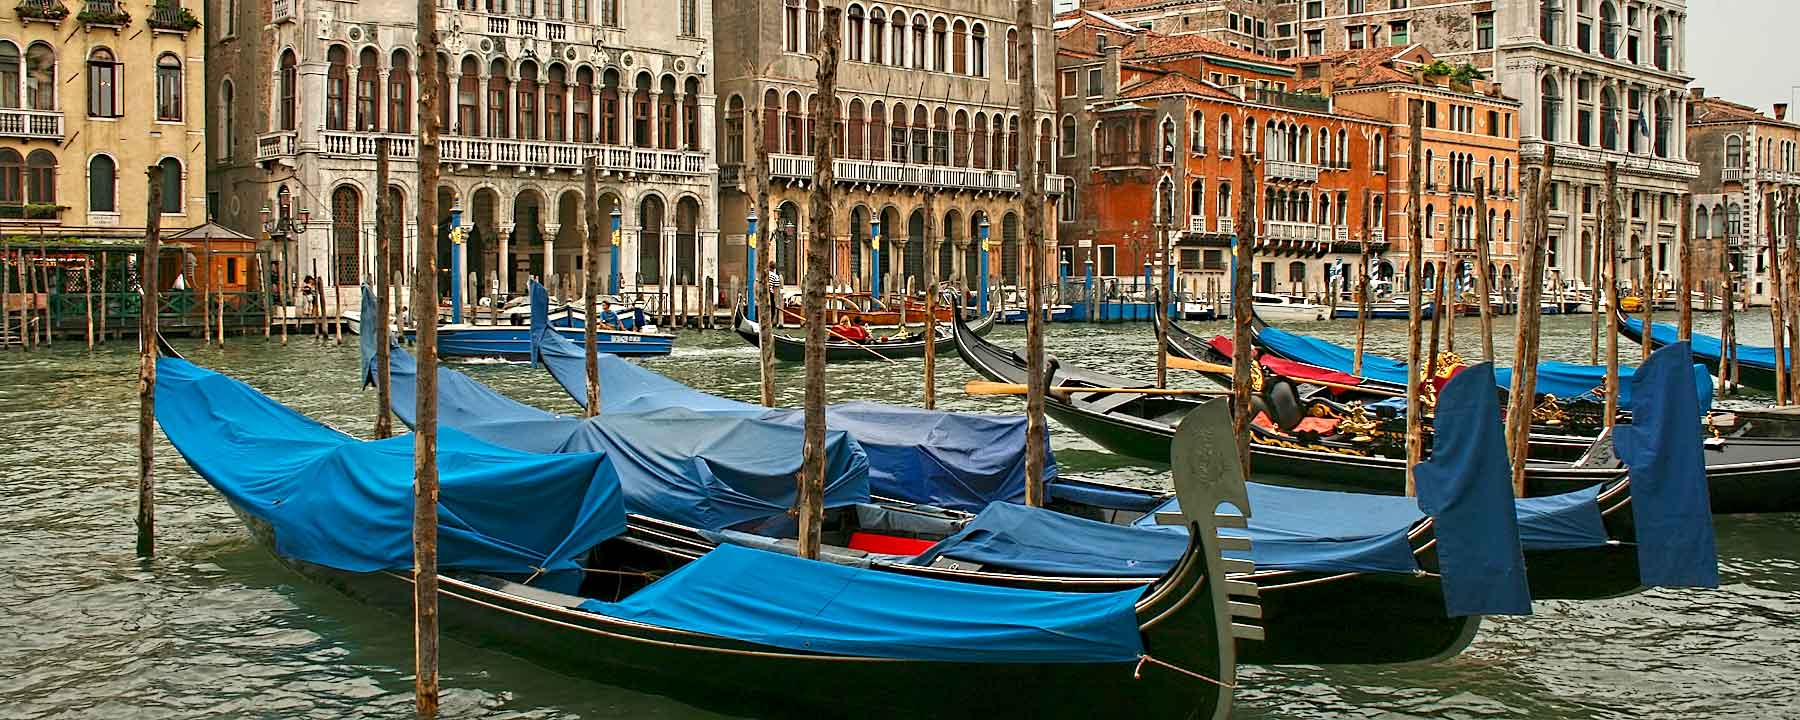 Italy Venice grand canal